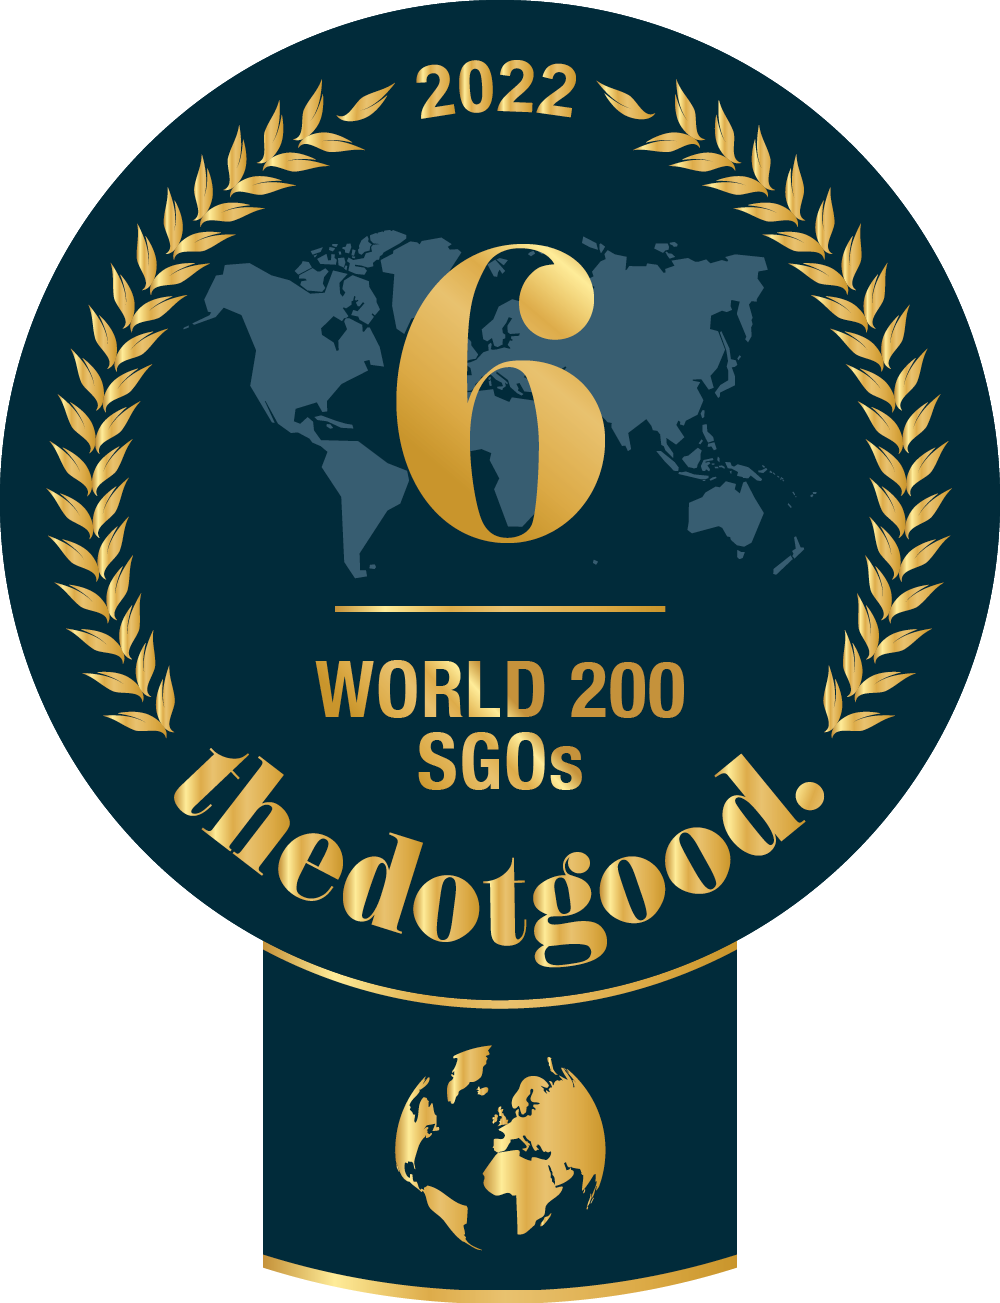 JA WORLDWIDE is world ranked on thedotgood.